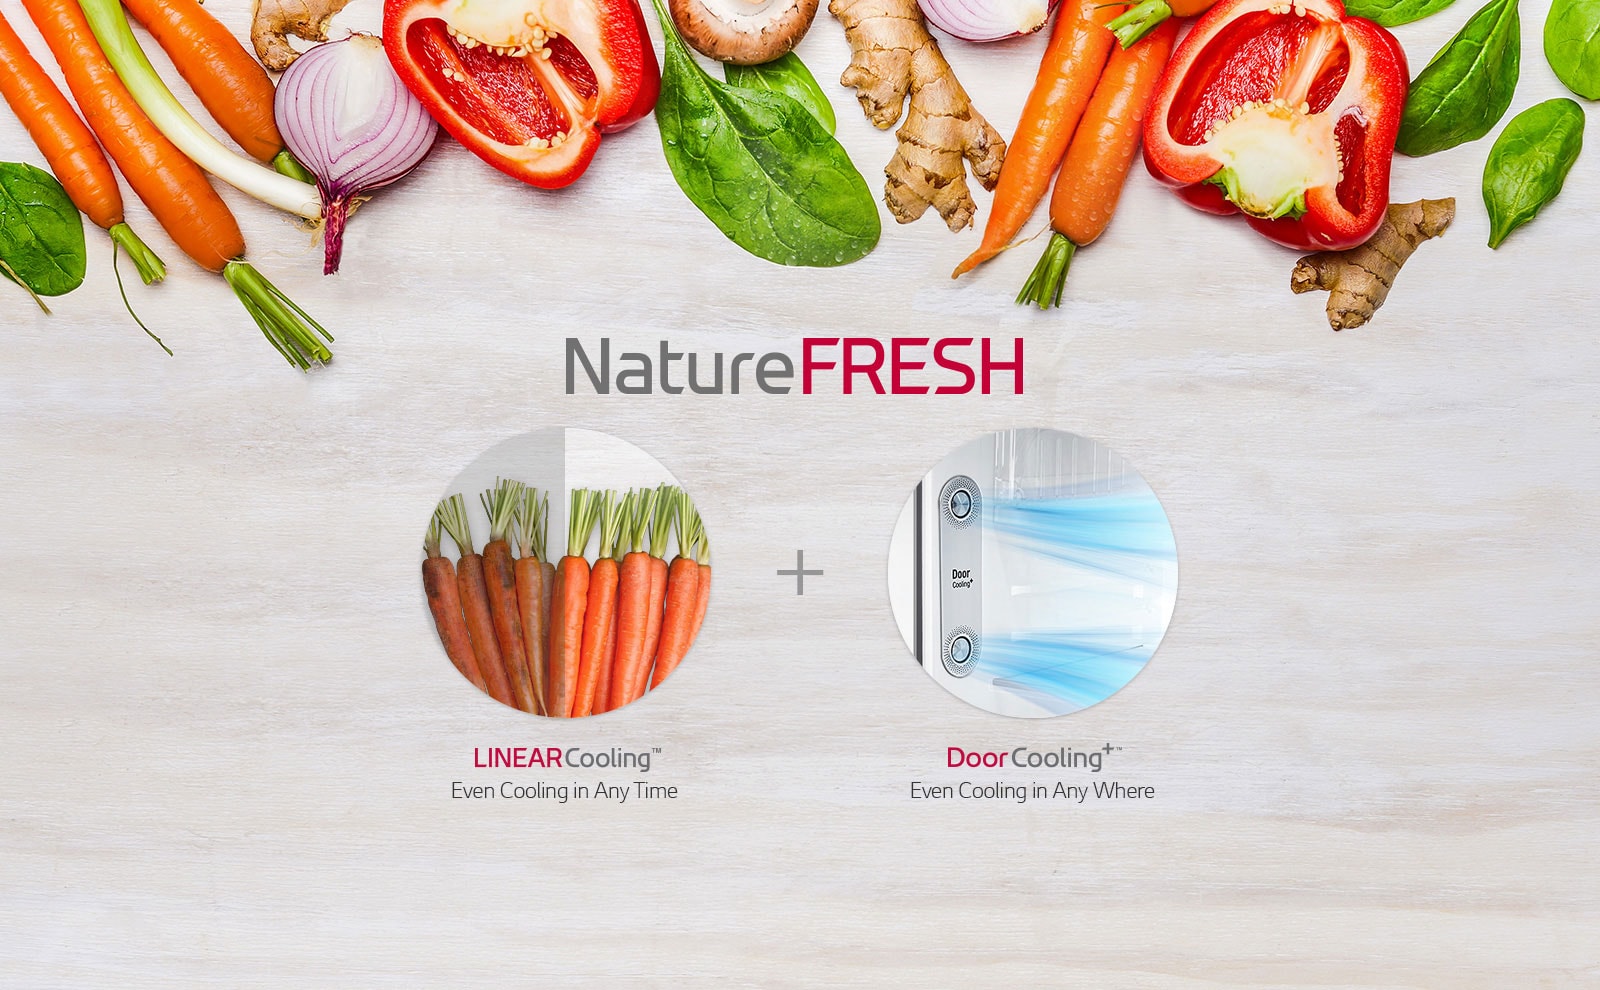 LG Net 256(L) Top Refrigerator | Nature Fresh | Multi Air Flow | LG East Africa